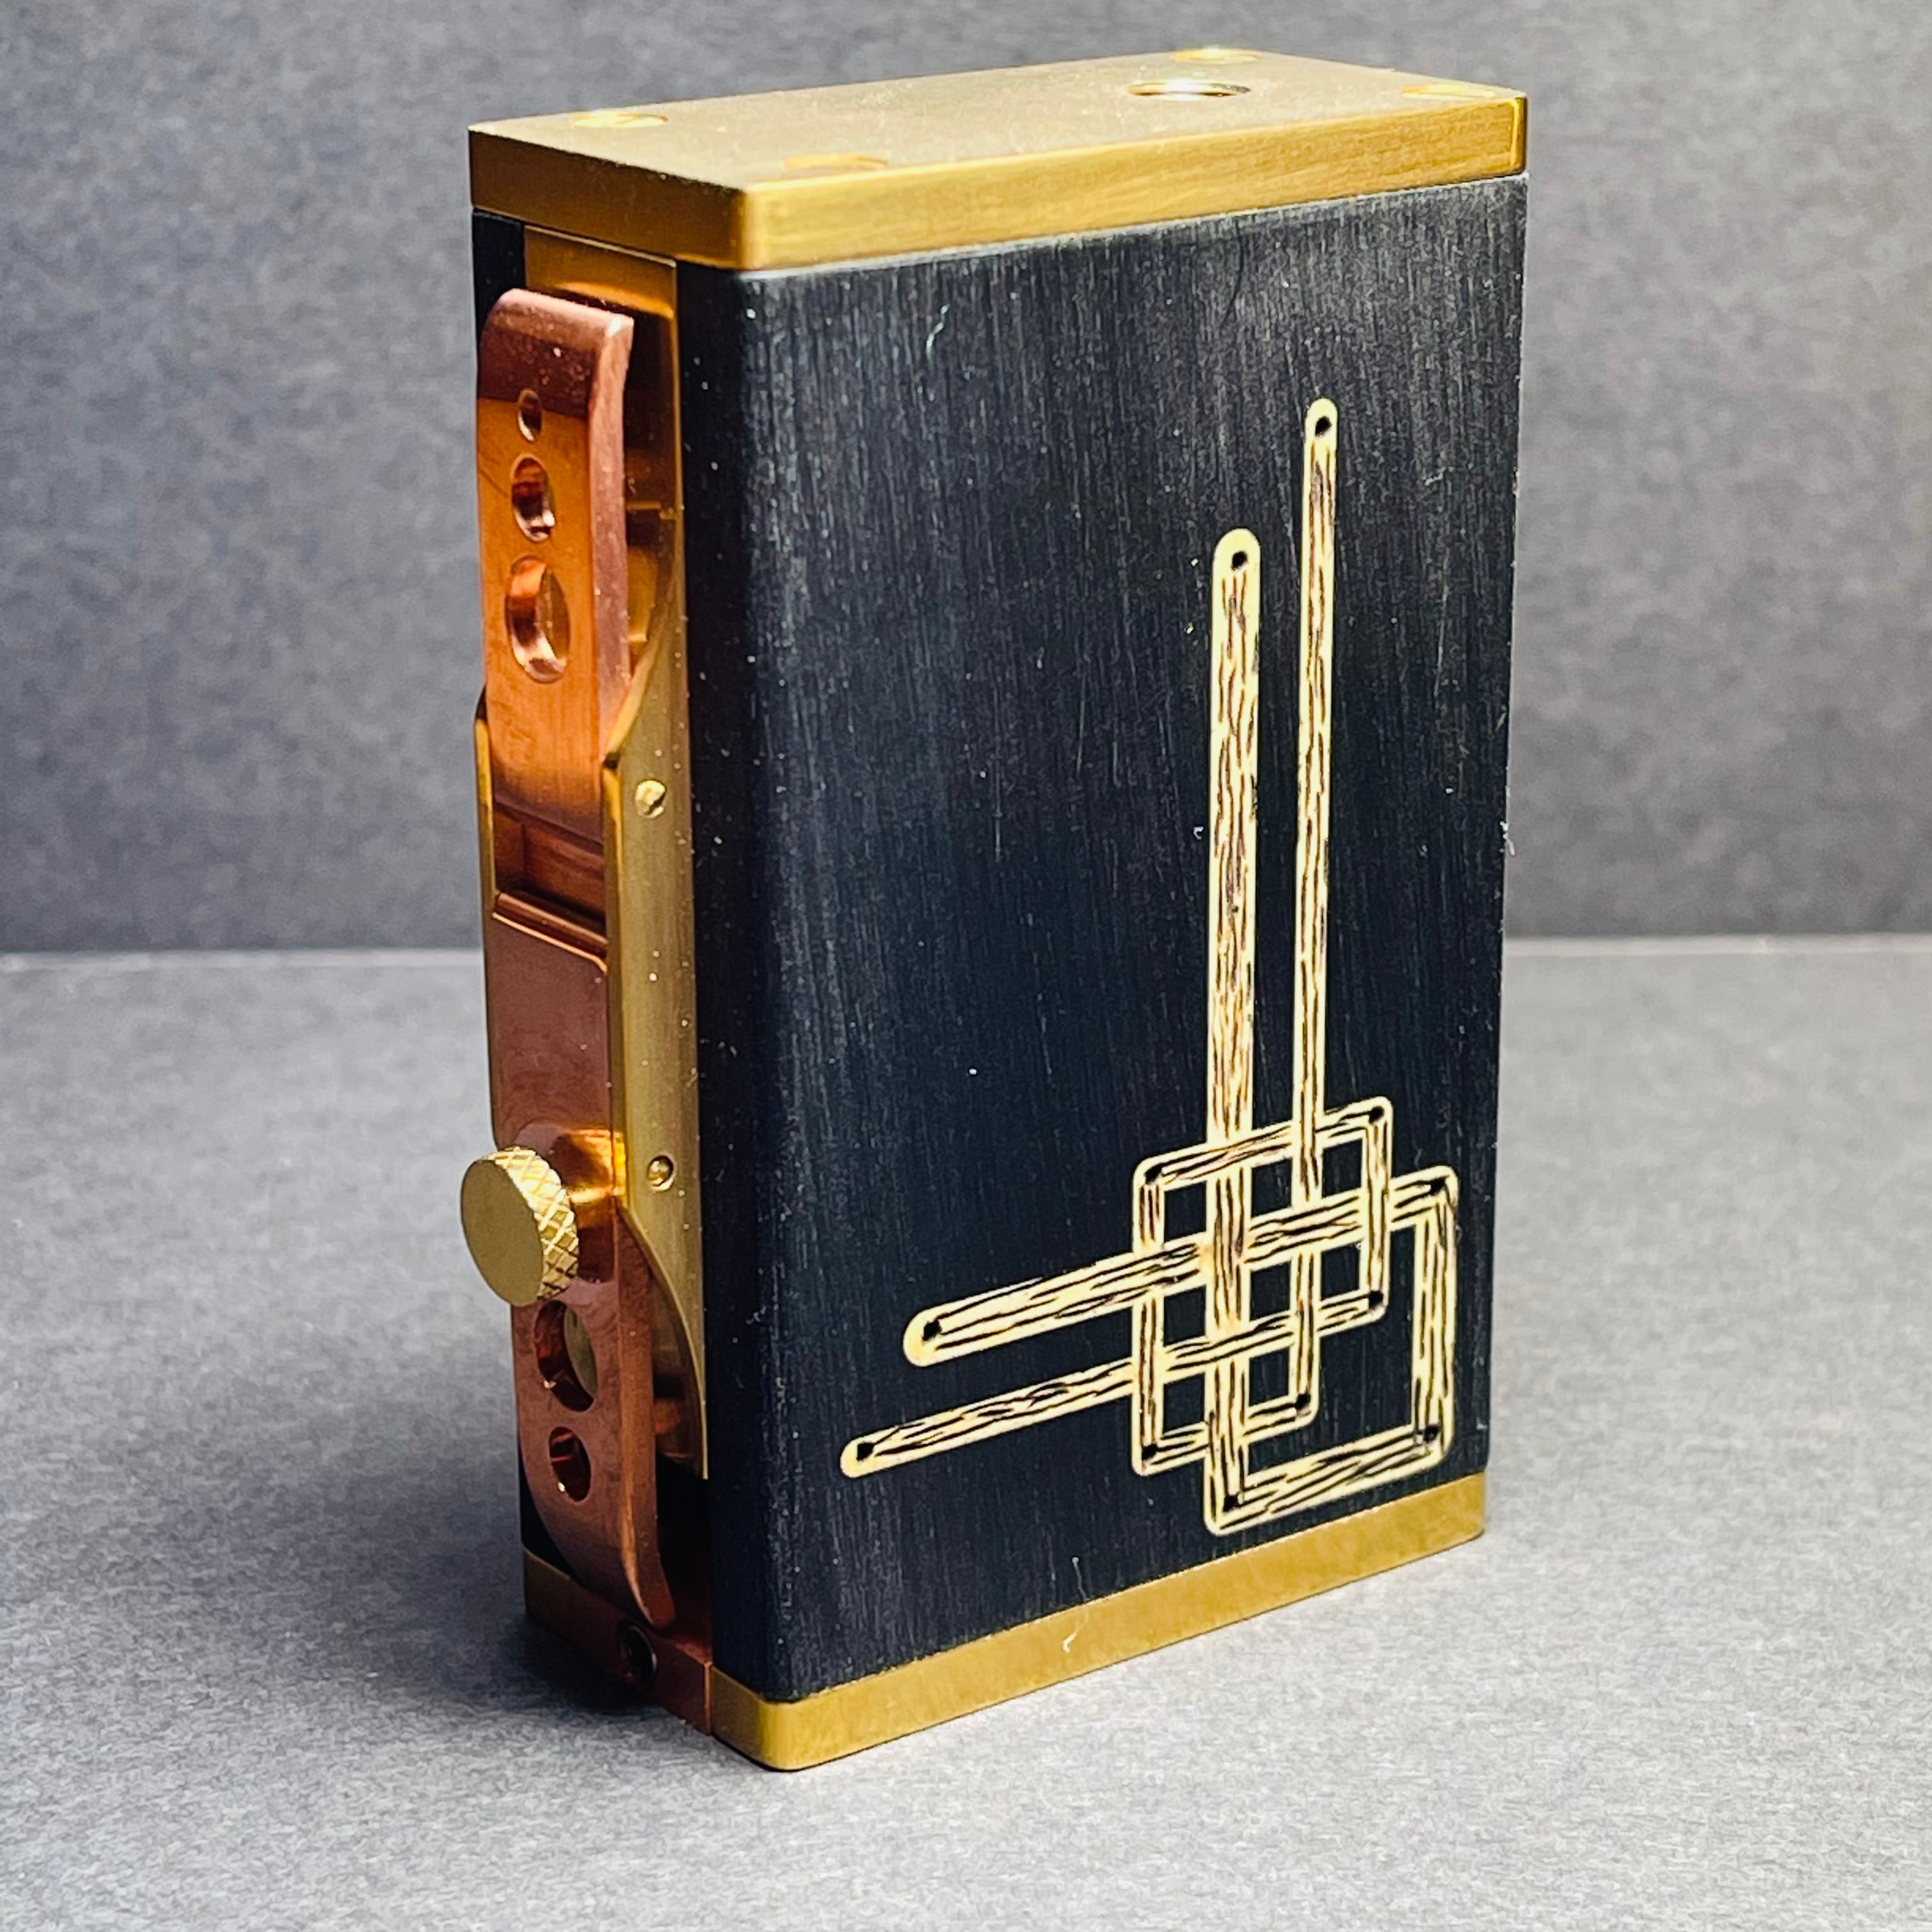 Gatub Art's & Crafts Weird Box V3 デュアル 18650 メカニカル MOD ...